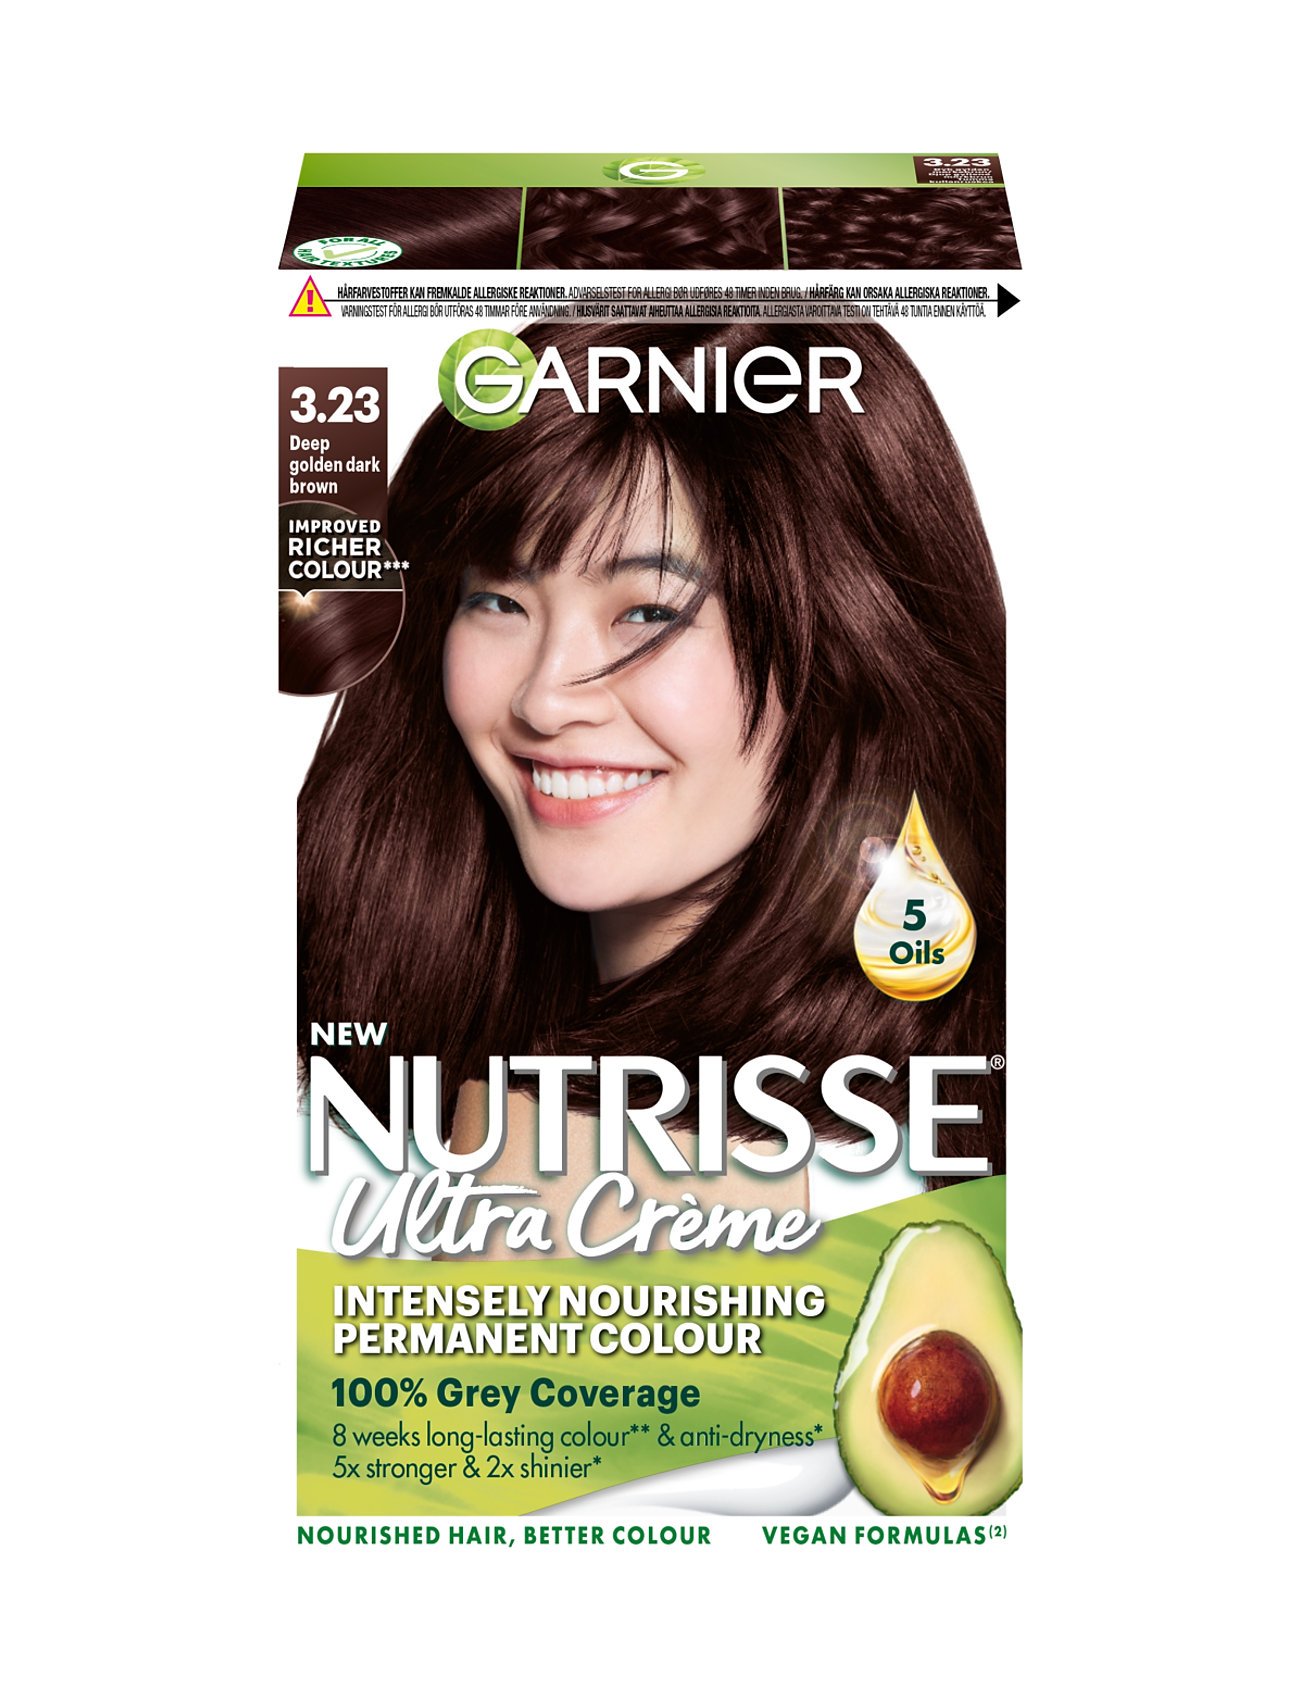 Garnier Nutrisse Ultra Crème 3.23 Deep Golden Dark Brown Beauty Women Hair Care Color Treatments Nude Garnier